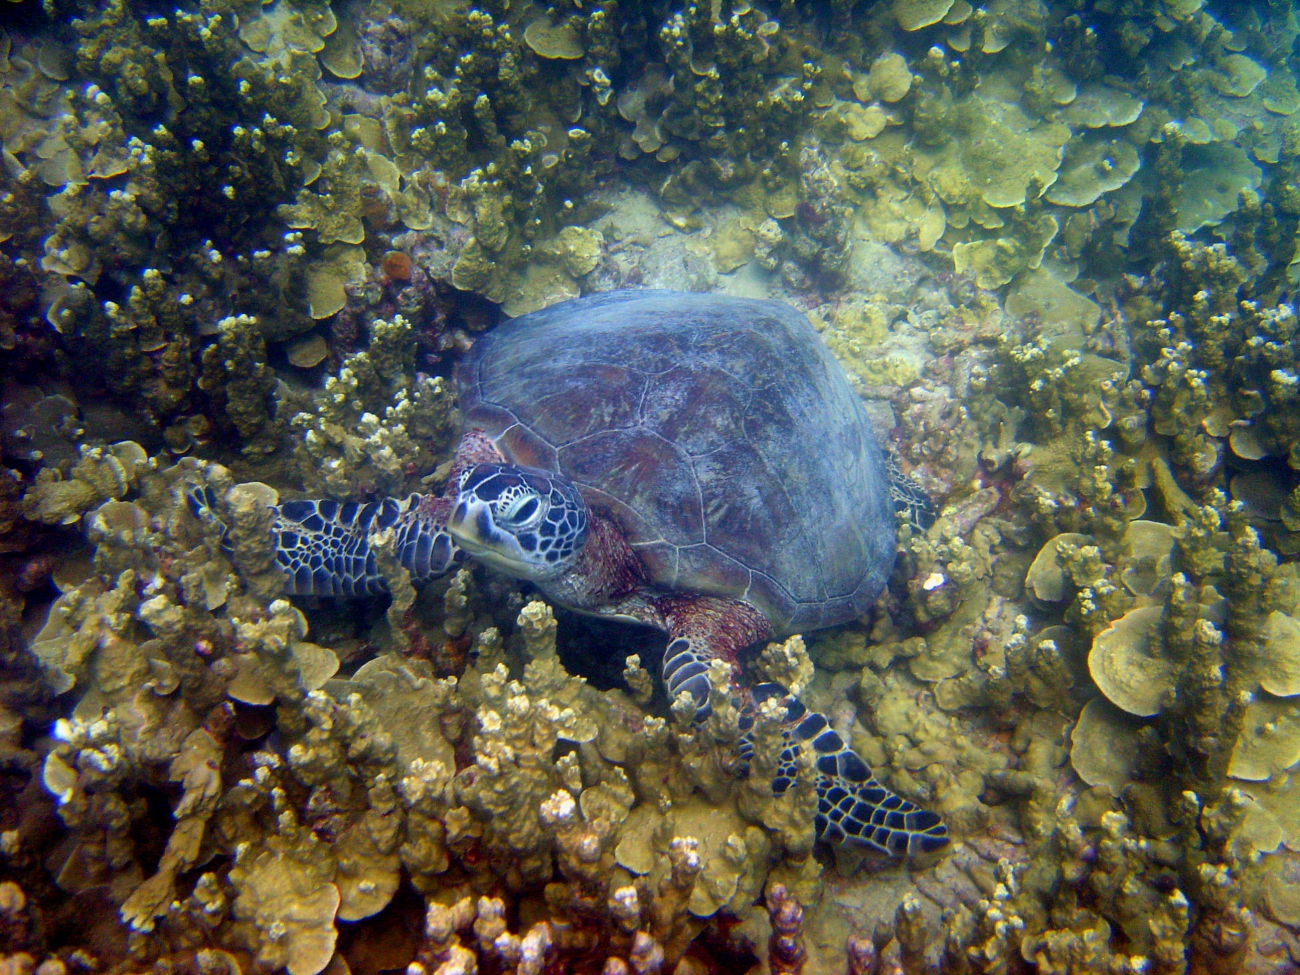 Green turtle on reef